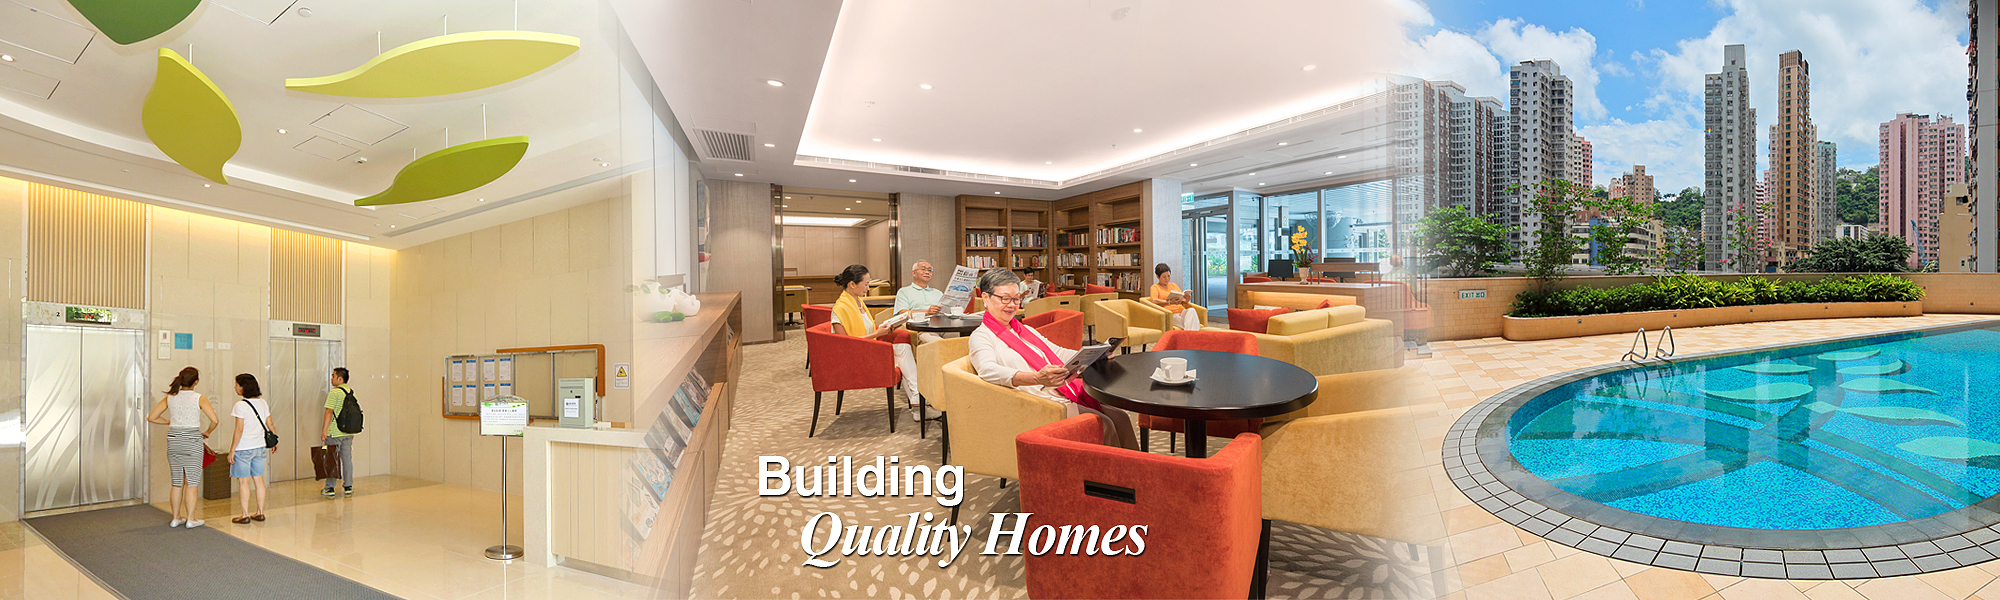 Building Quality Homes 